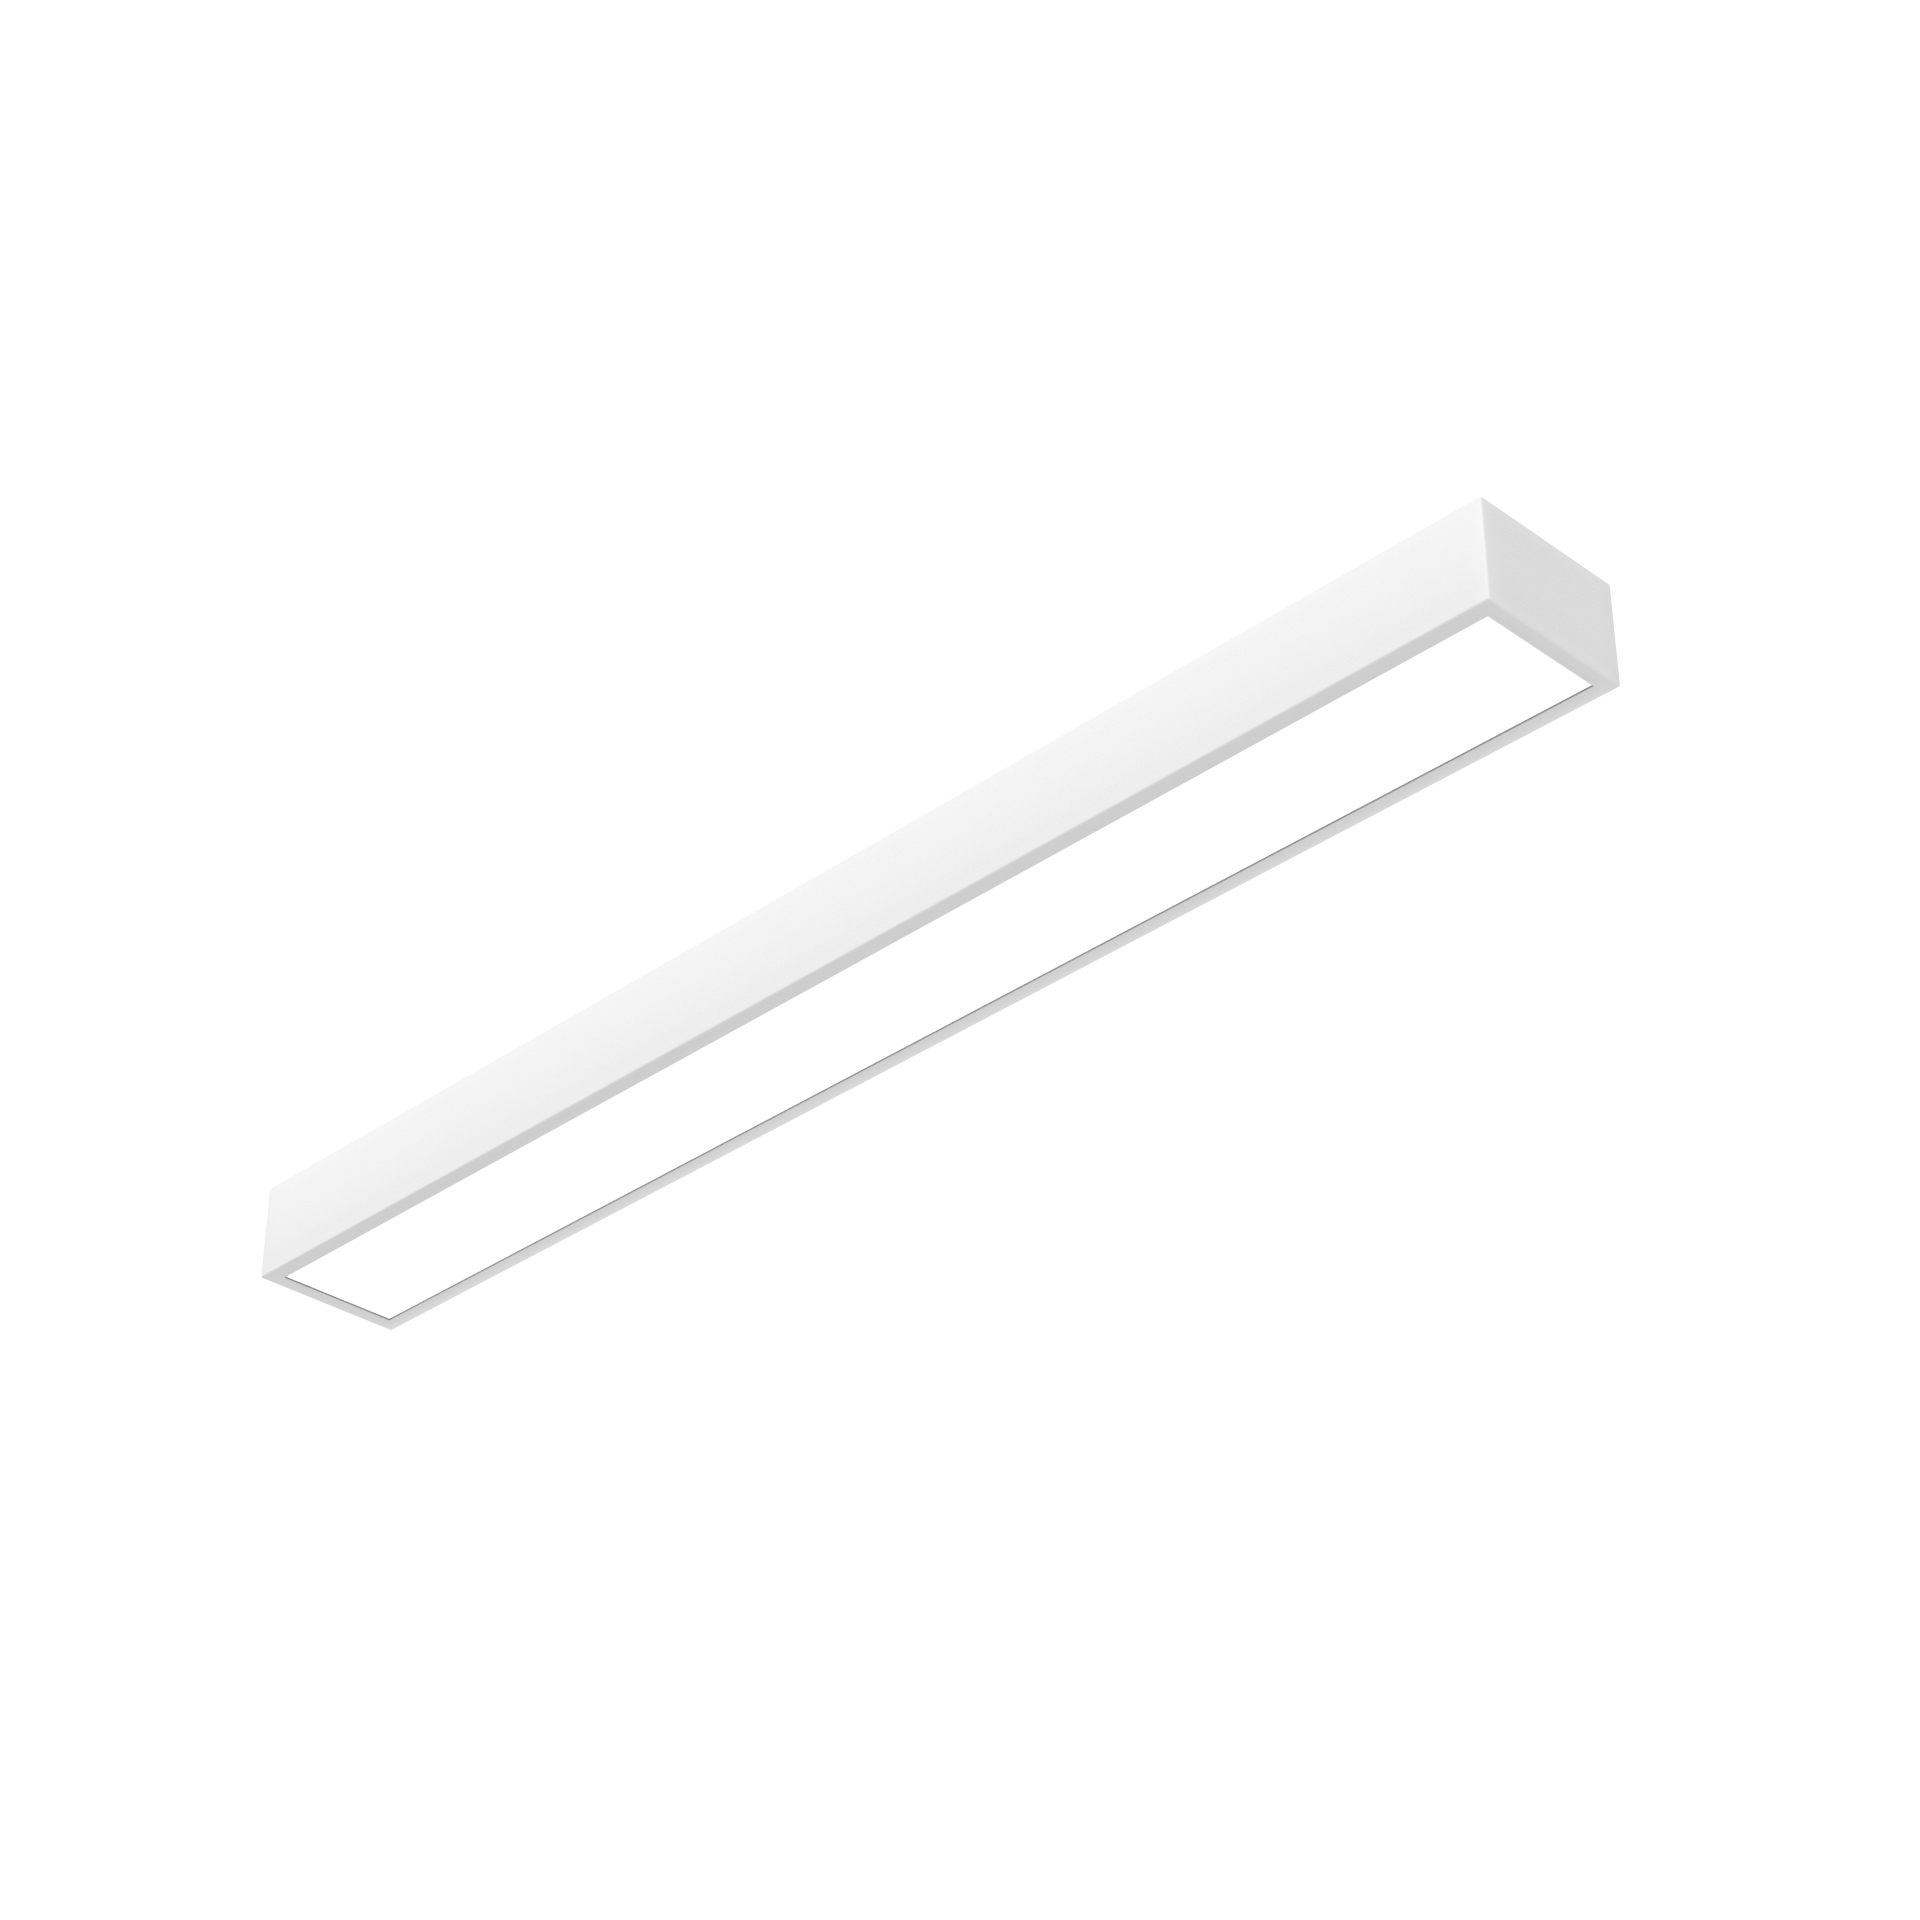 Светодиодный светильник VARTON Gexus Line Up'n'Down 1500x160x110 мм 35 Вт/50 Вт 4000 К RAL9003 белый муар опал-микропризма DALI